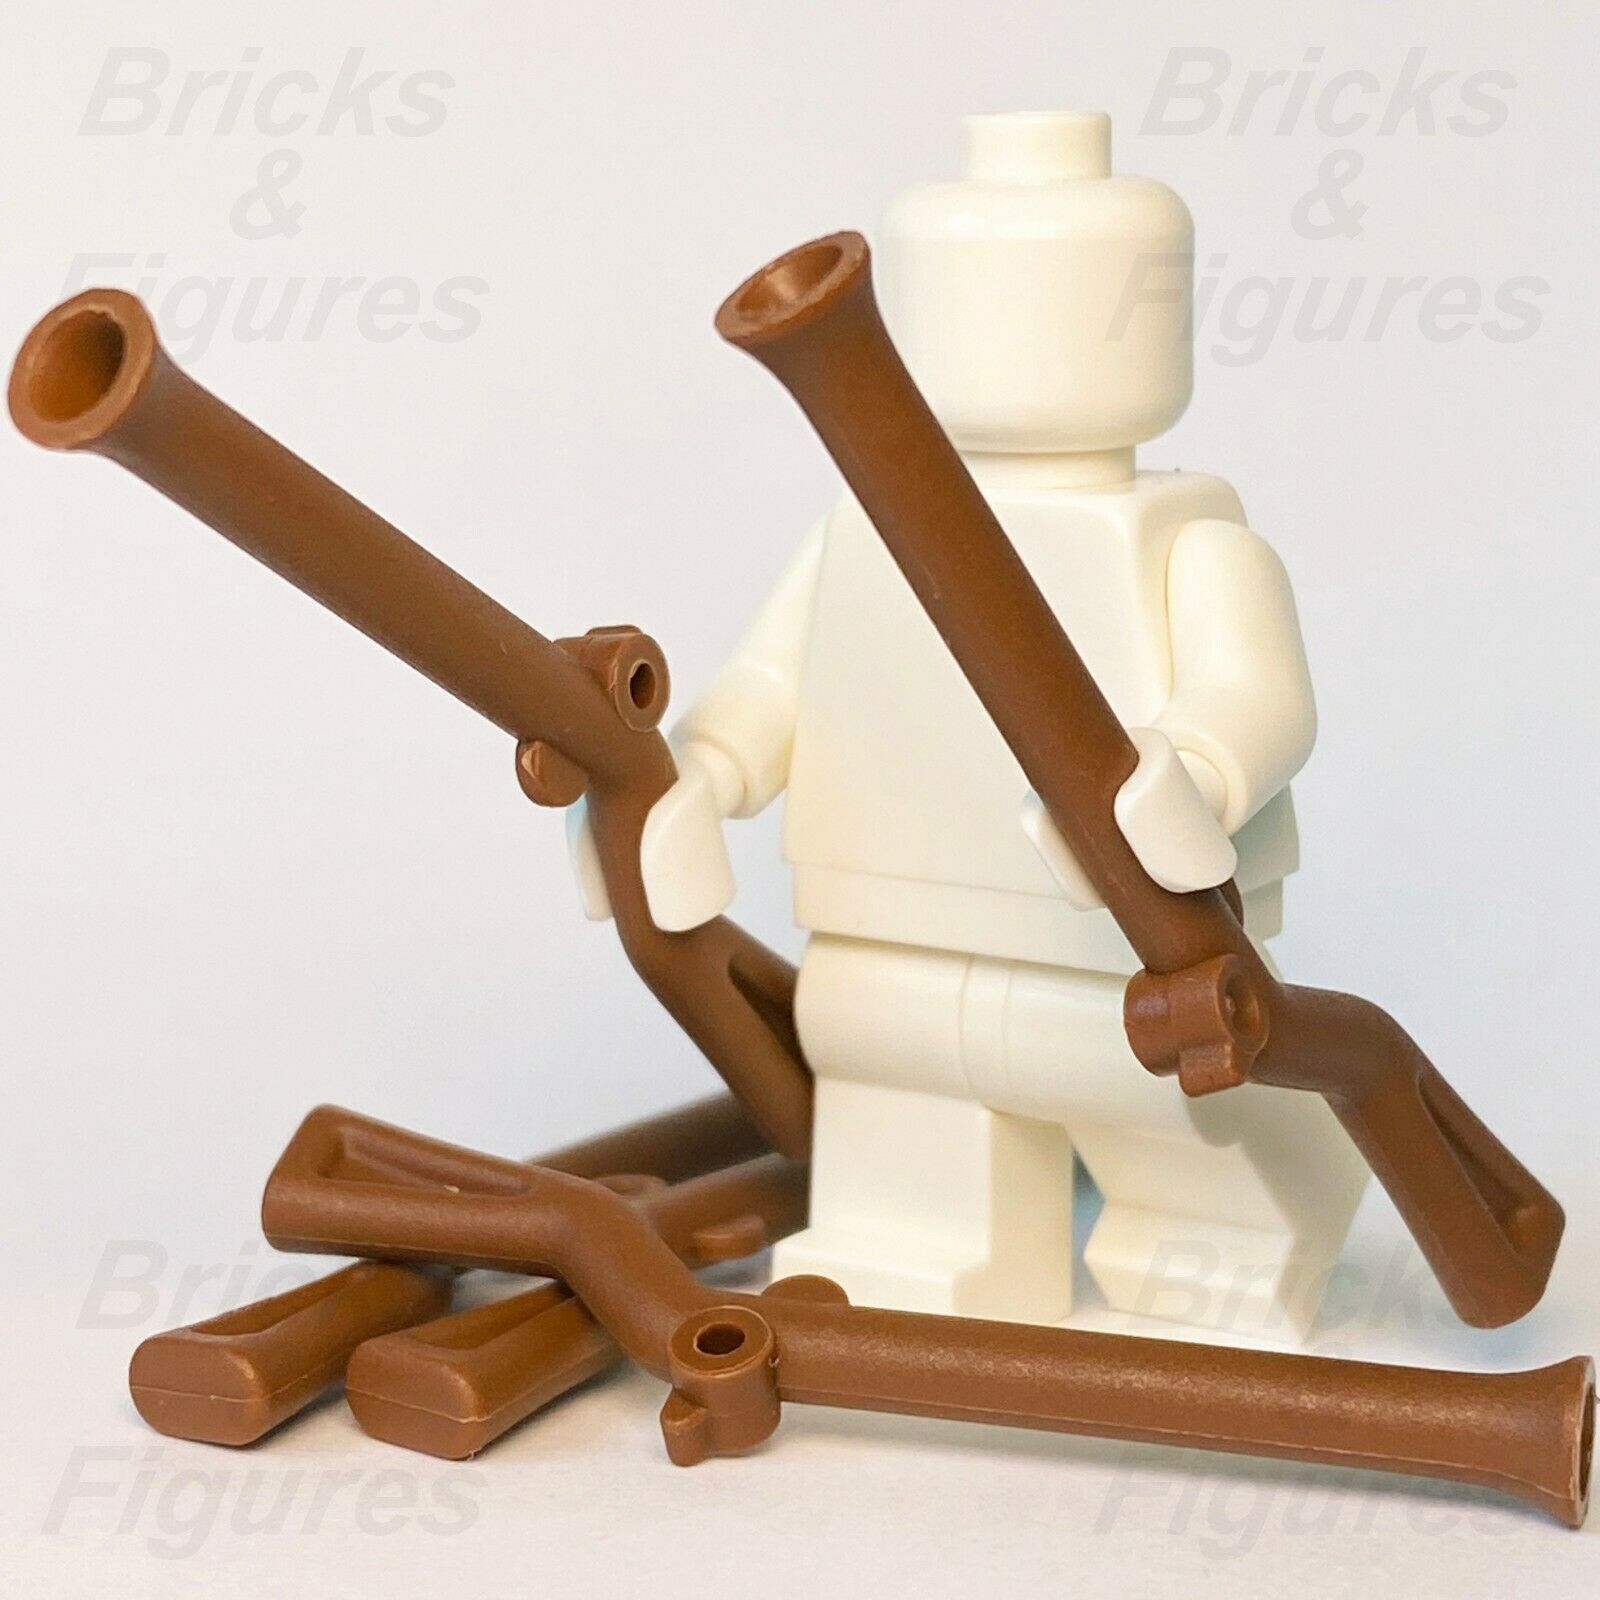 5 x Pirates LEGO Reddish Brown Flintlock Musket Gun Minifigure Weapon Parts - Bricks & Figures